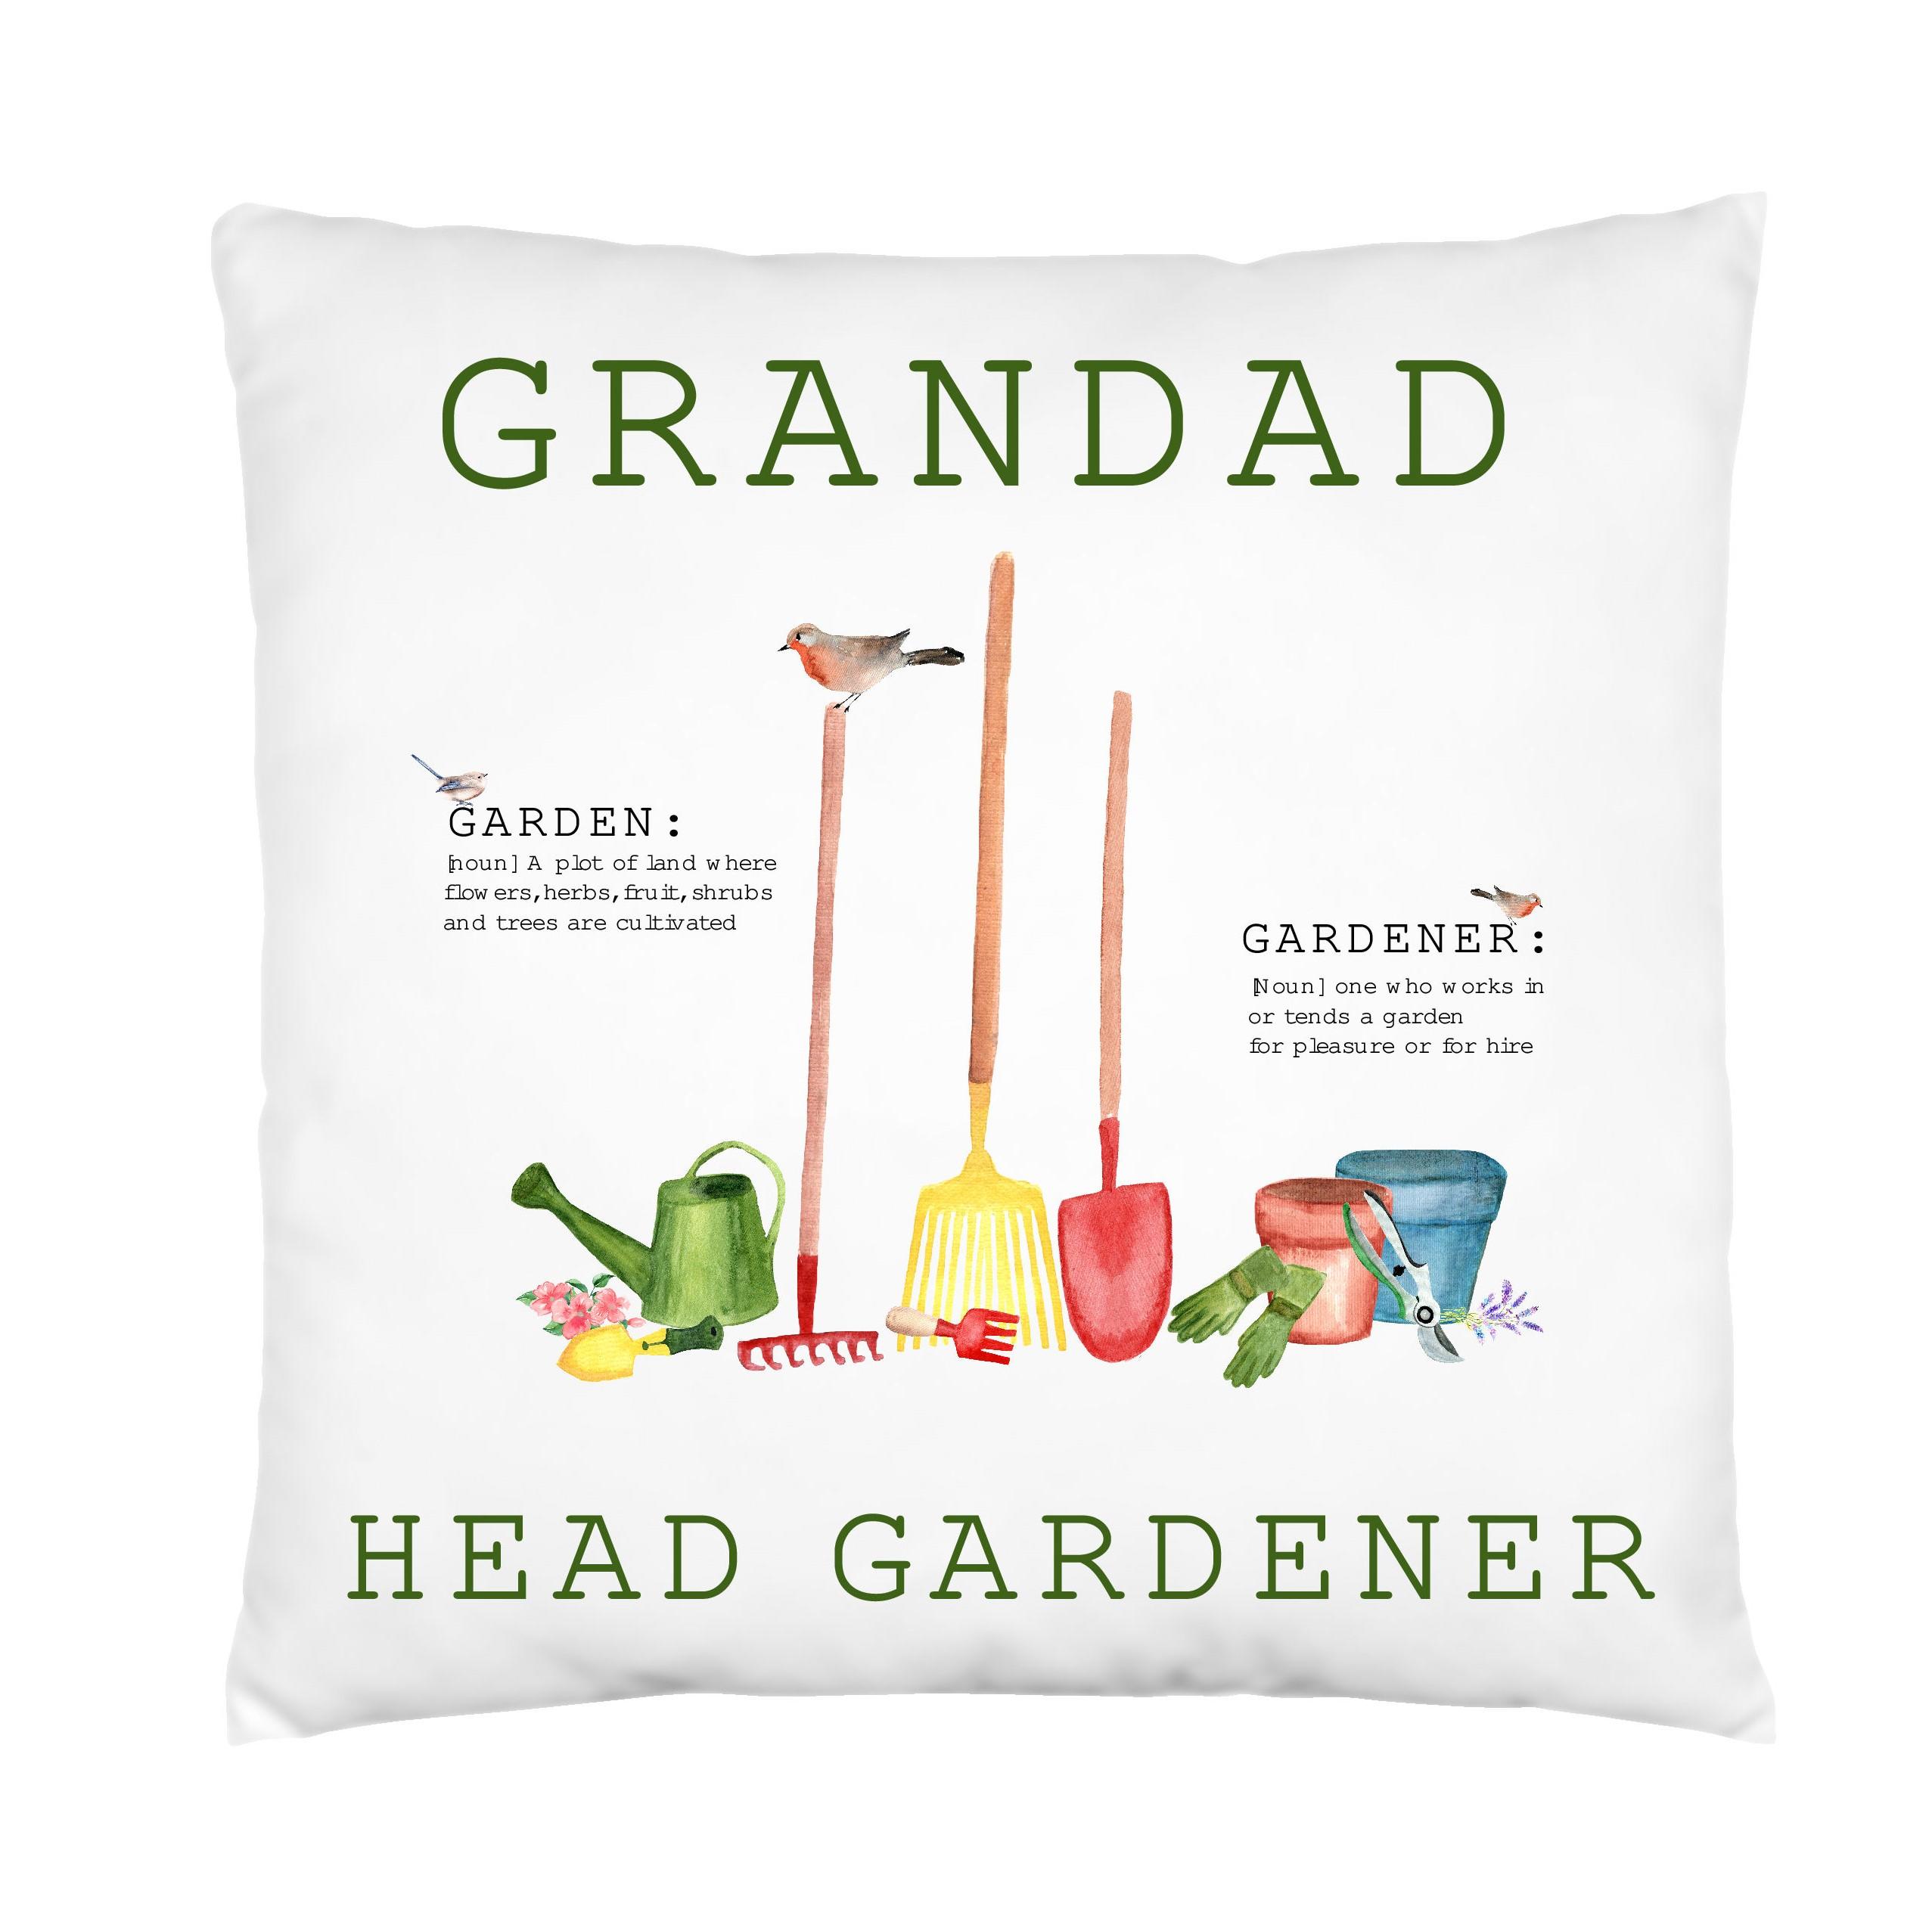 Head Gardener Personalised Cushion,Pillow,Gardening Gift,Personalised Gift for Gardener,Home Decor